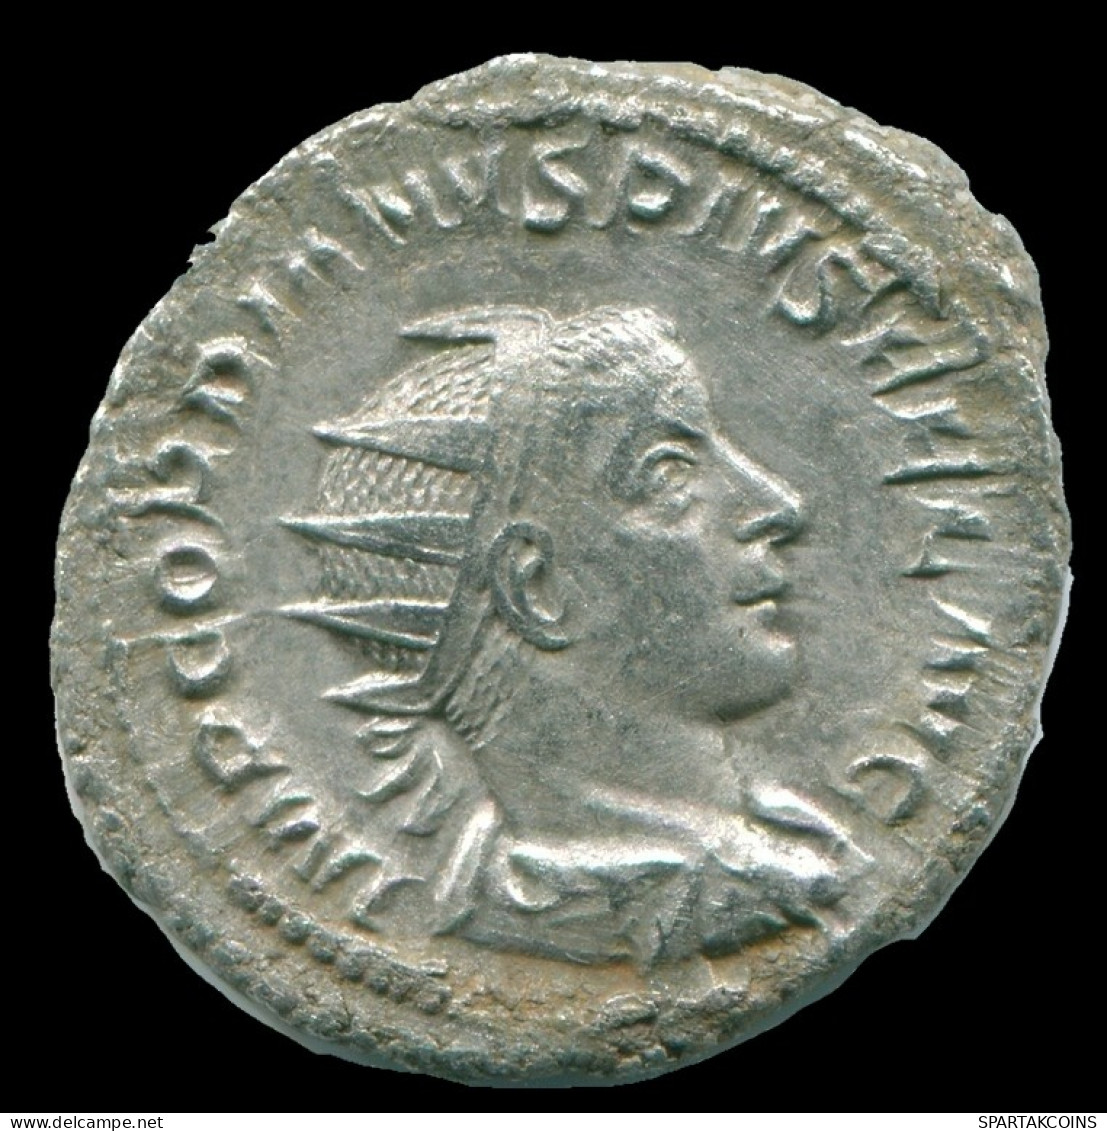 GORDIAN III AR ANTONINIANUS ROME AD 241 P M TR P IIII COS II P P #ANC13142.38.E.A - L'Anarchie Militaire (235 à 284)